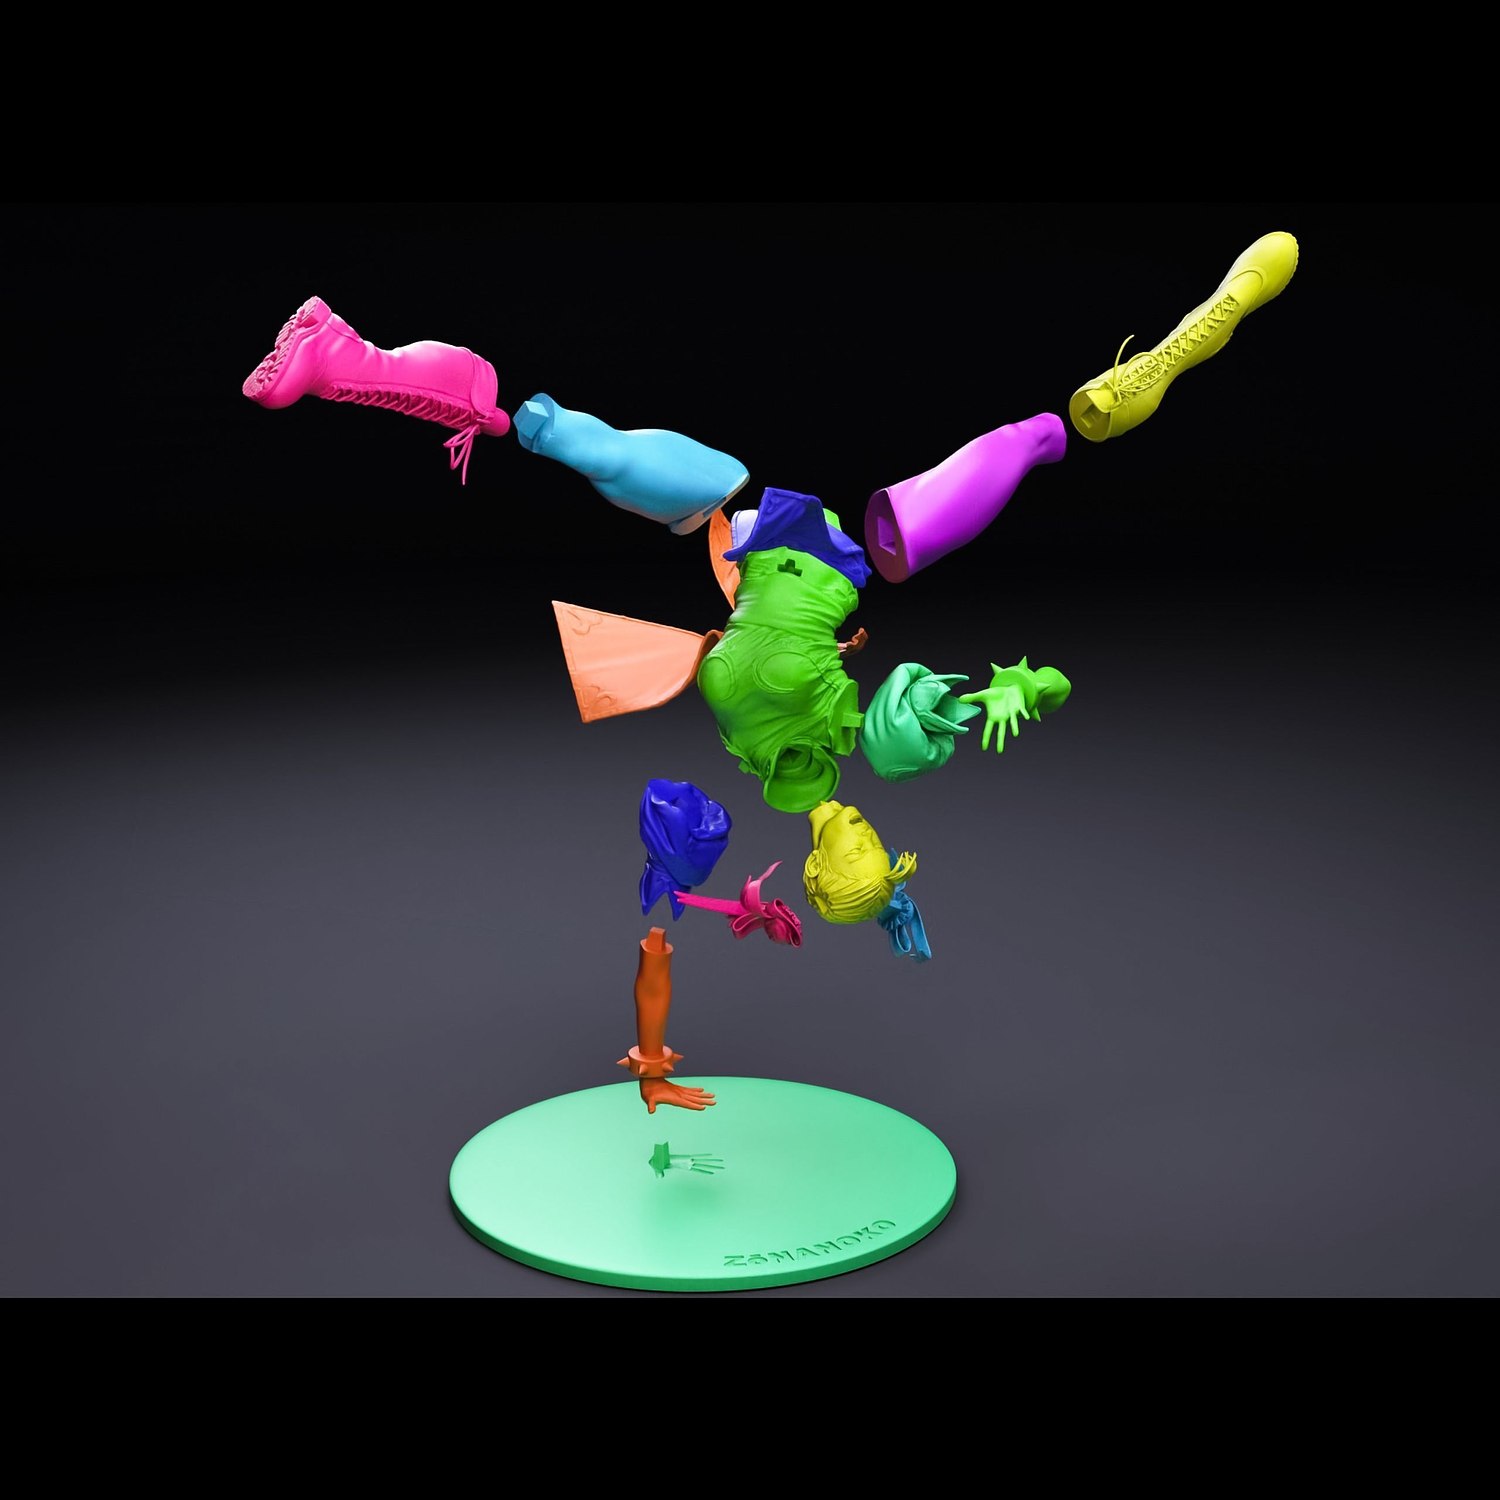 Chun-Li Spinning Bird Kick Fan Art